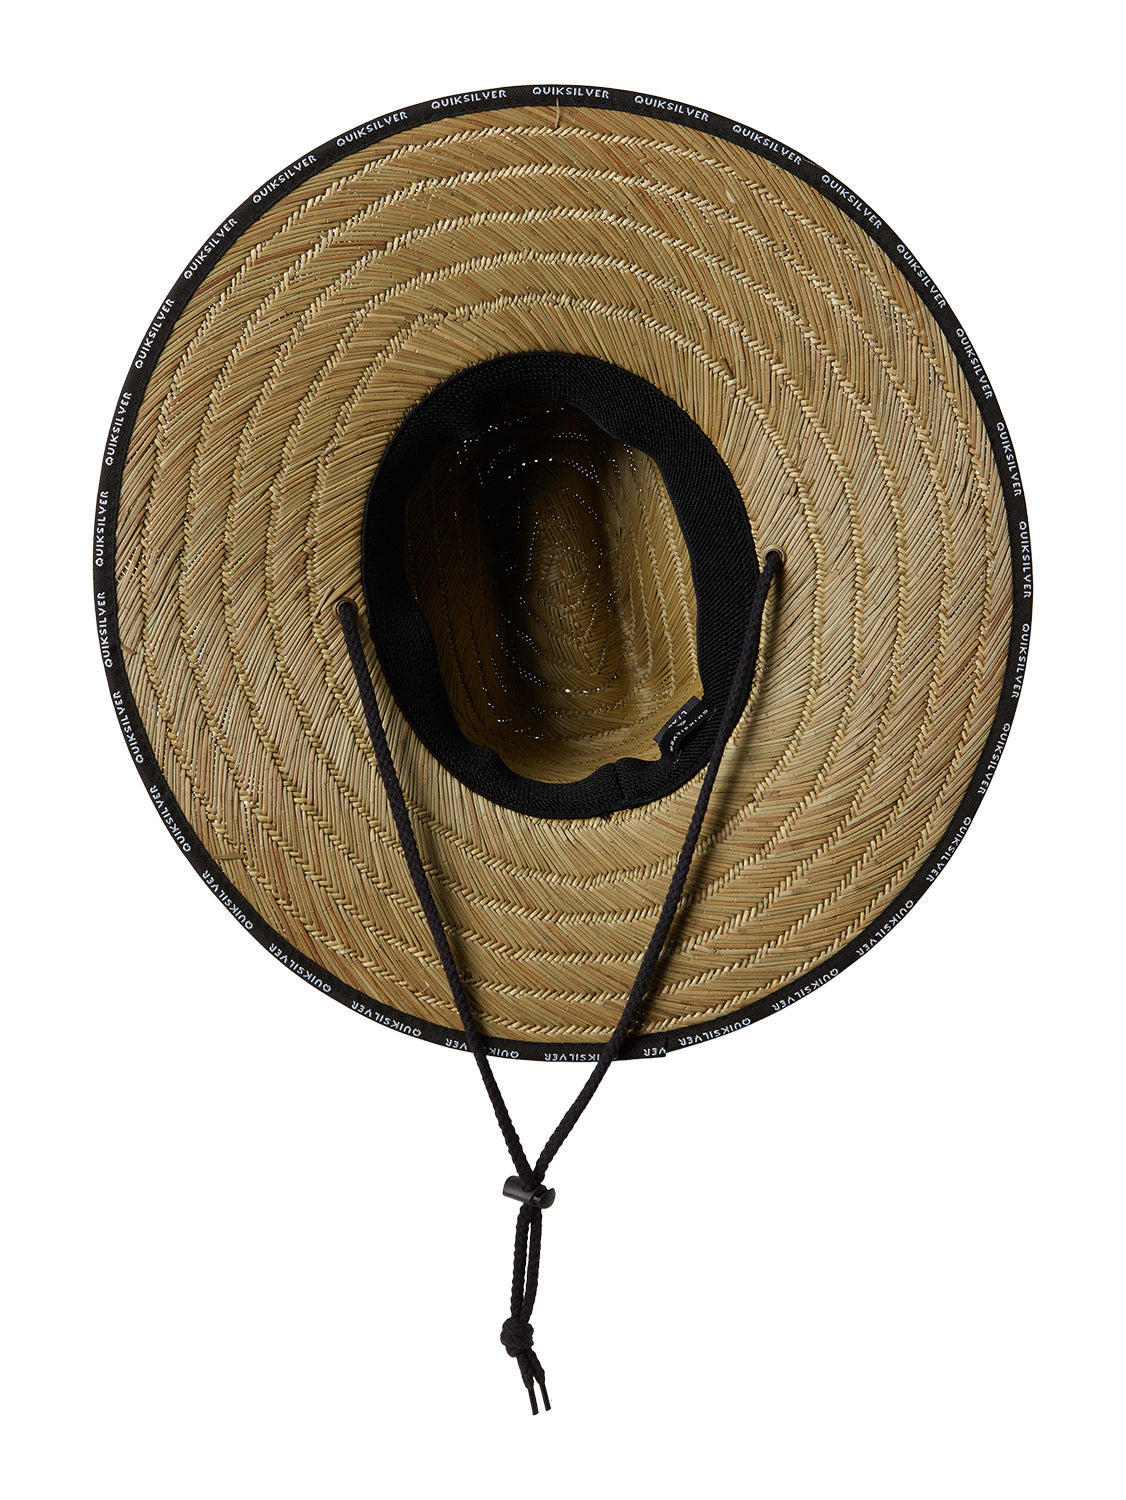 Quiksilver Mens Pierside Taper Straw Hat